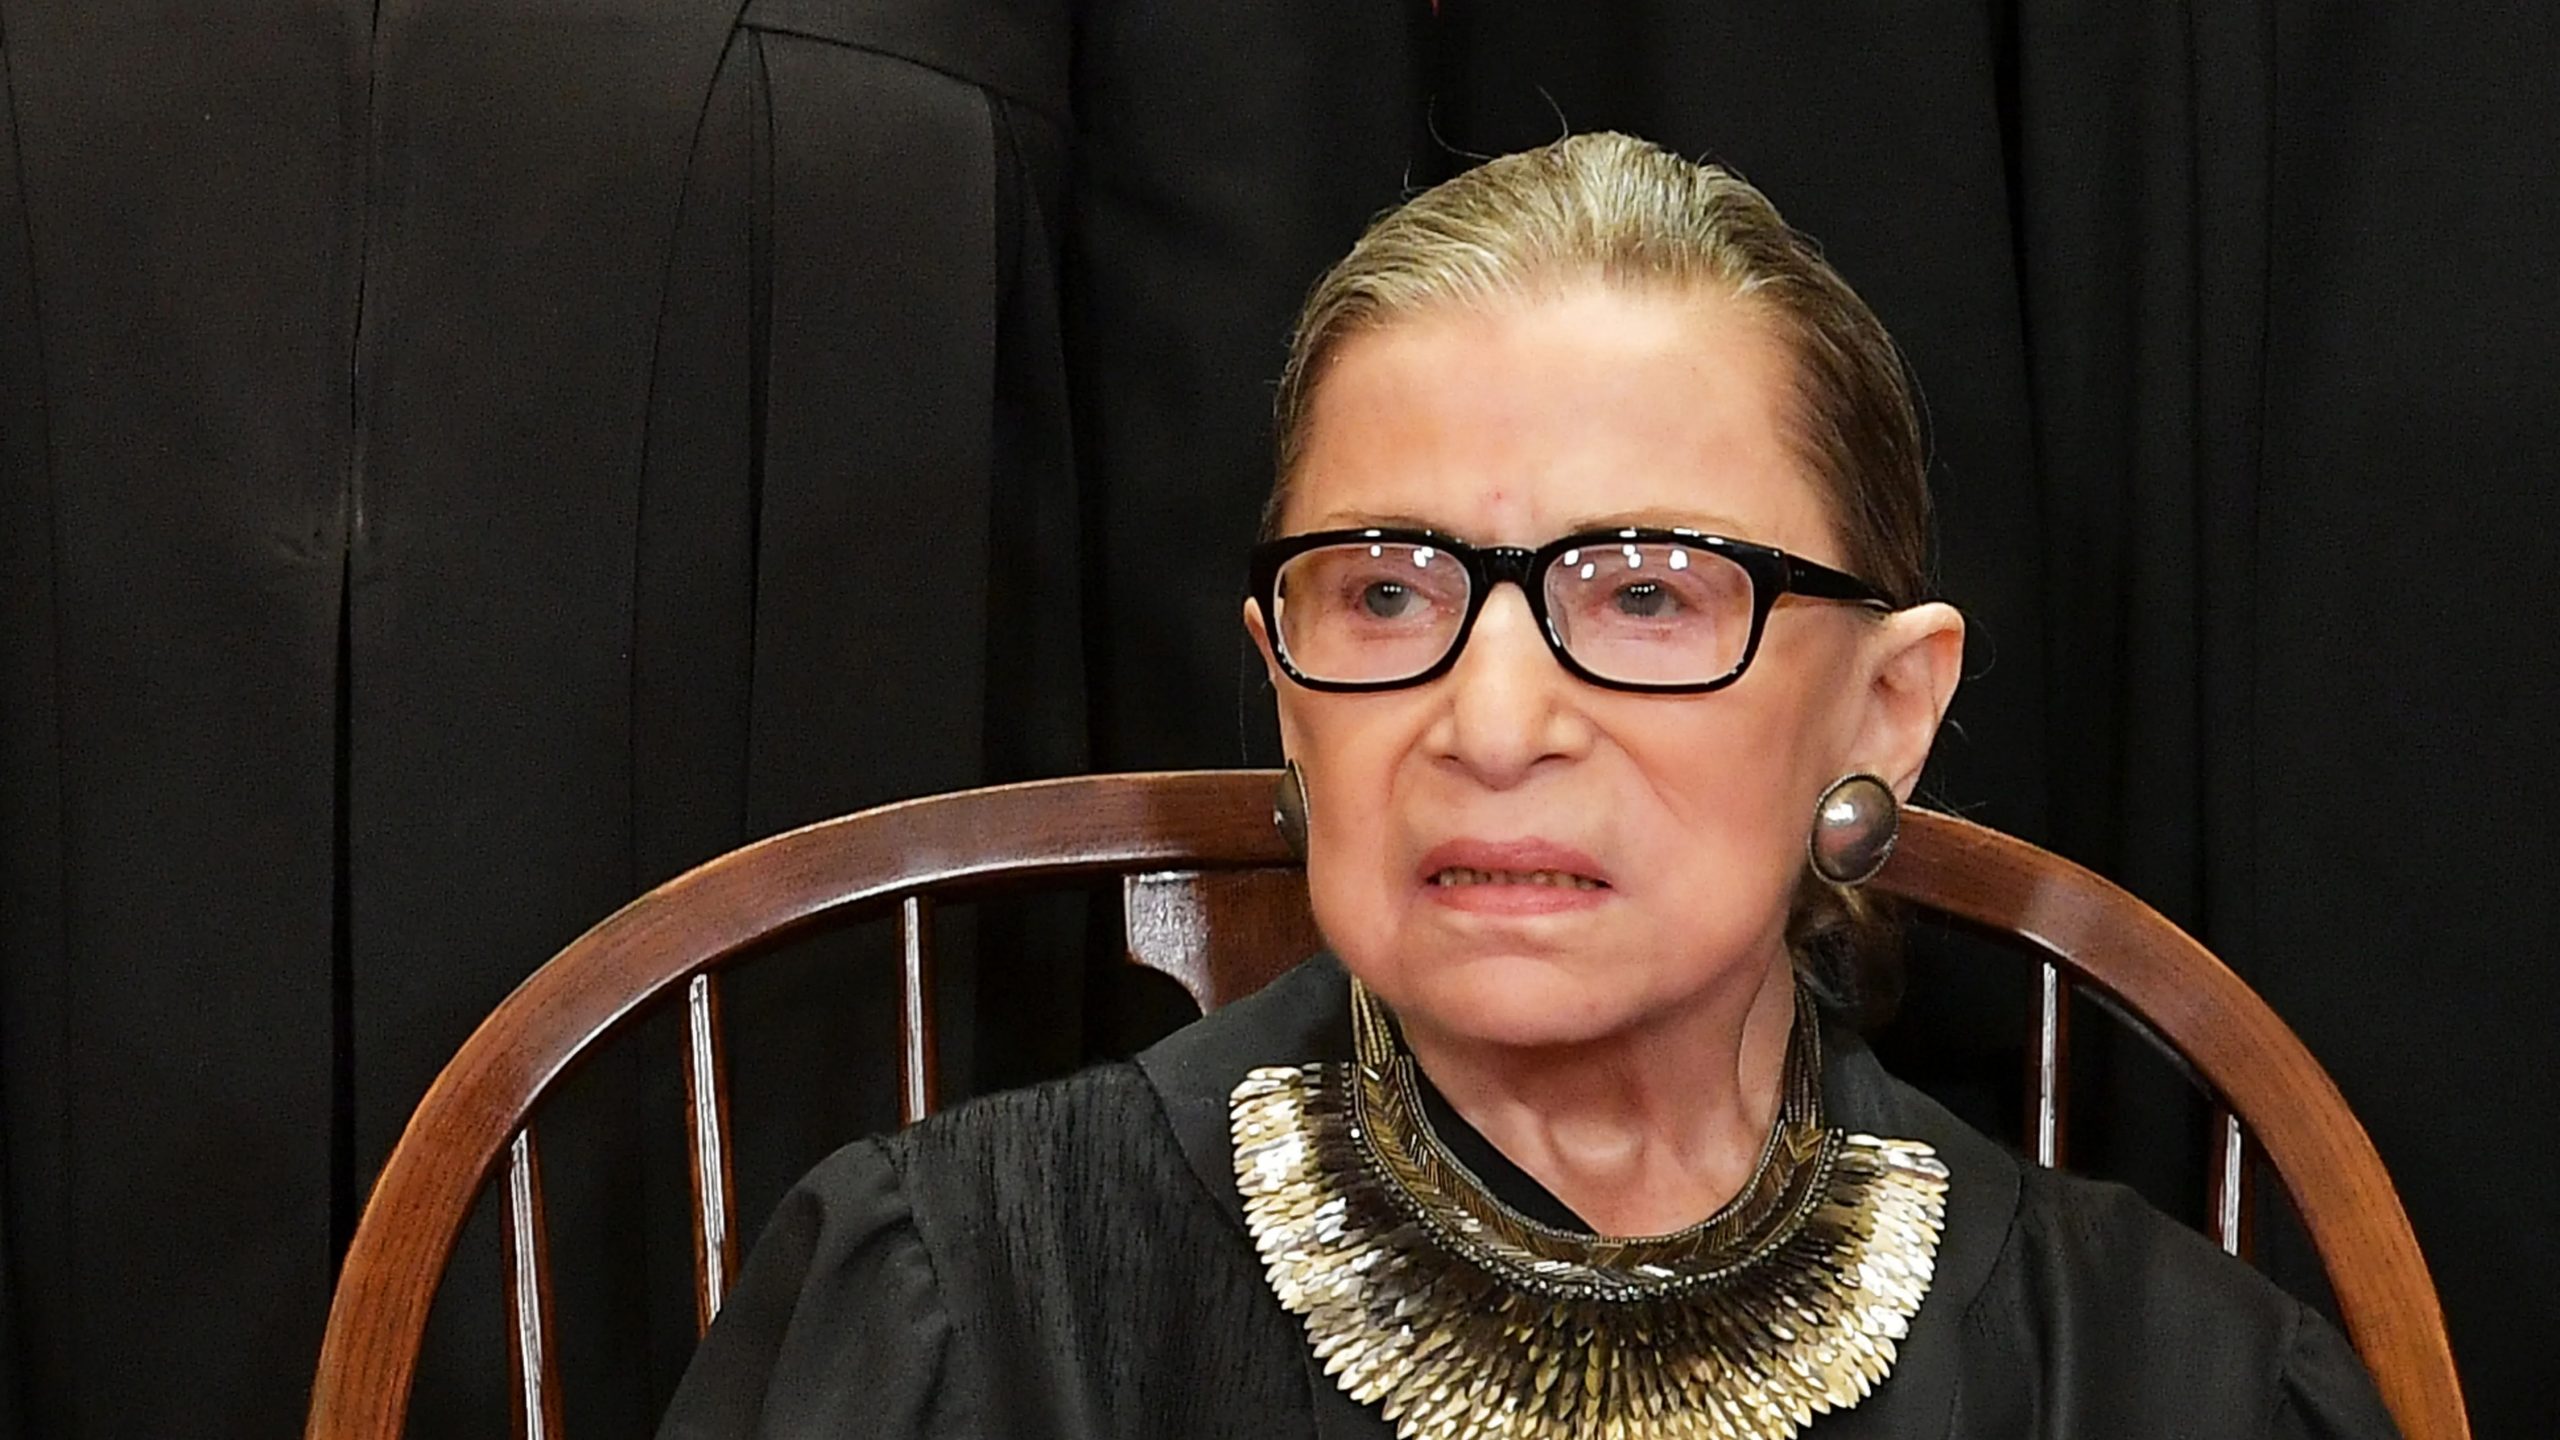 Ruth Bader Ginsburg, progressive icon of US Supreme Court, dies at 87